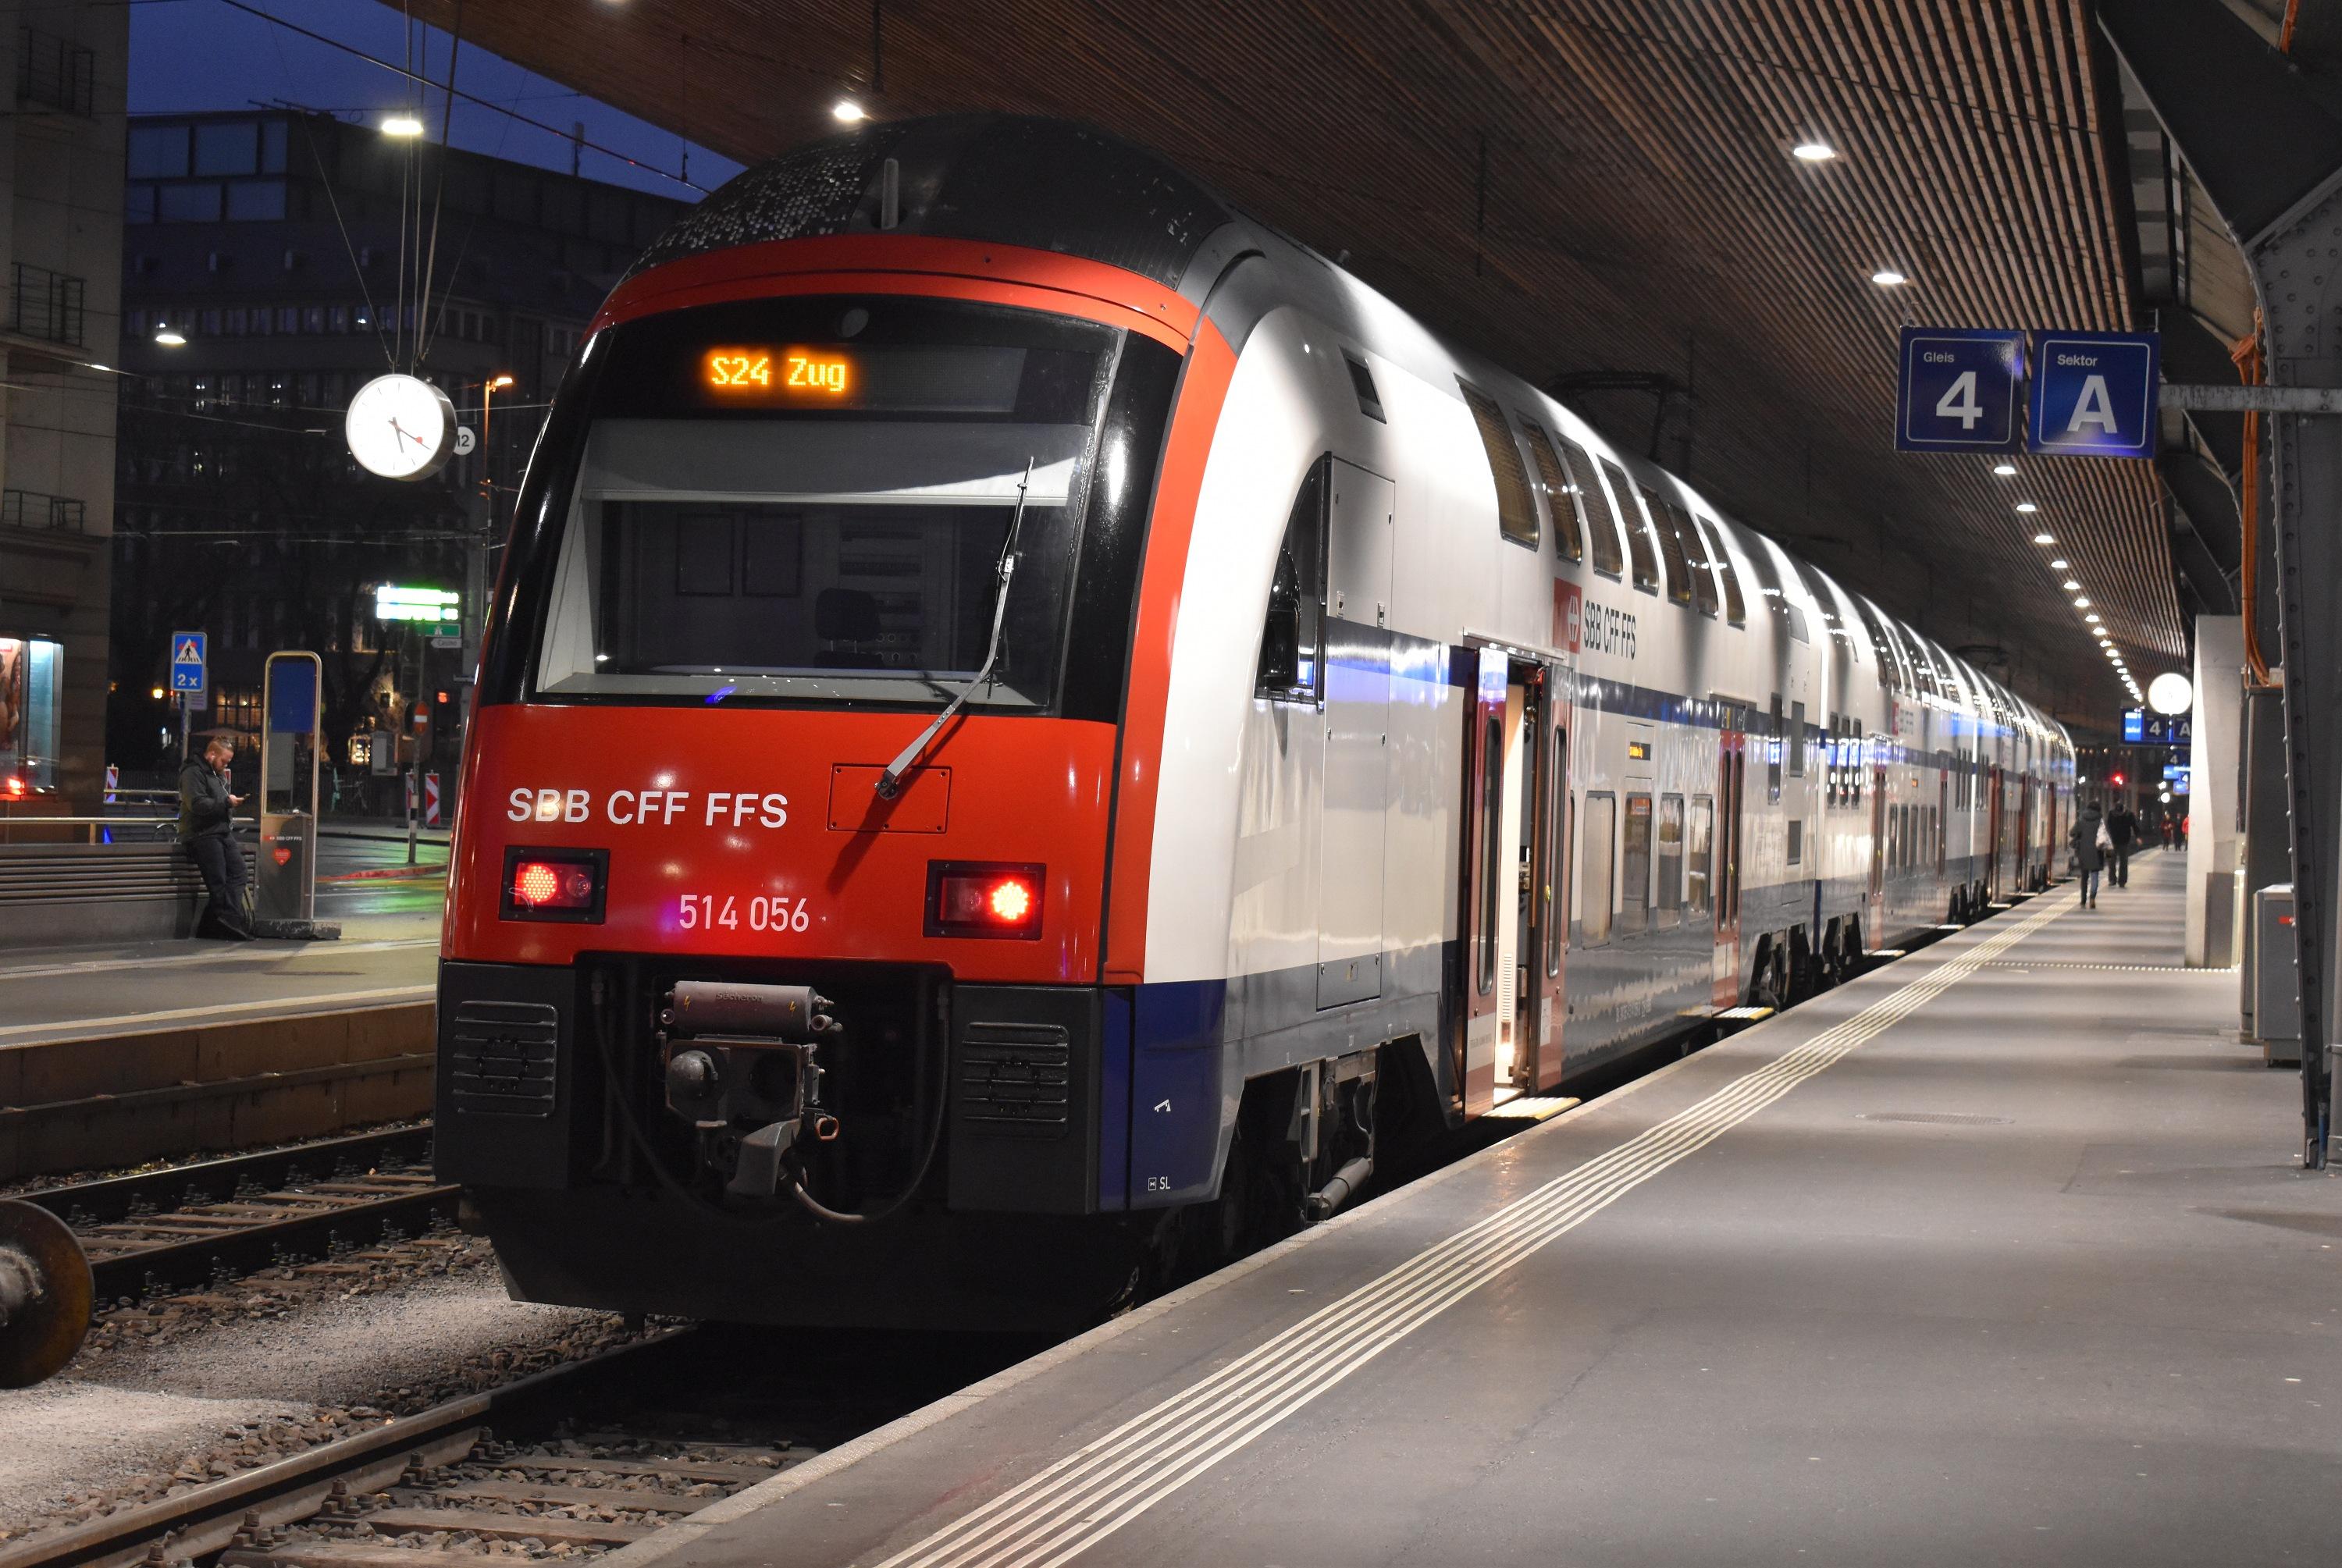 S24 Zug Zürich HB